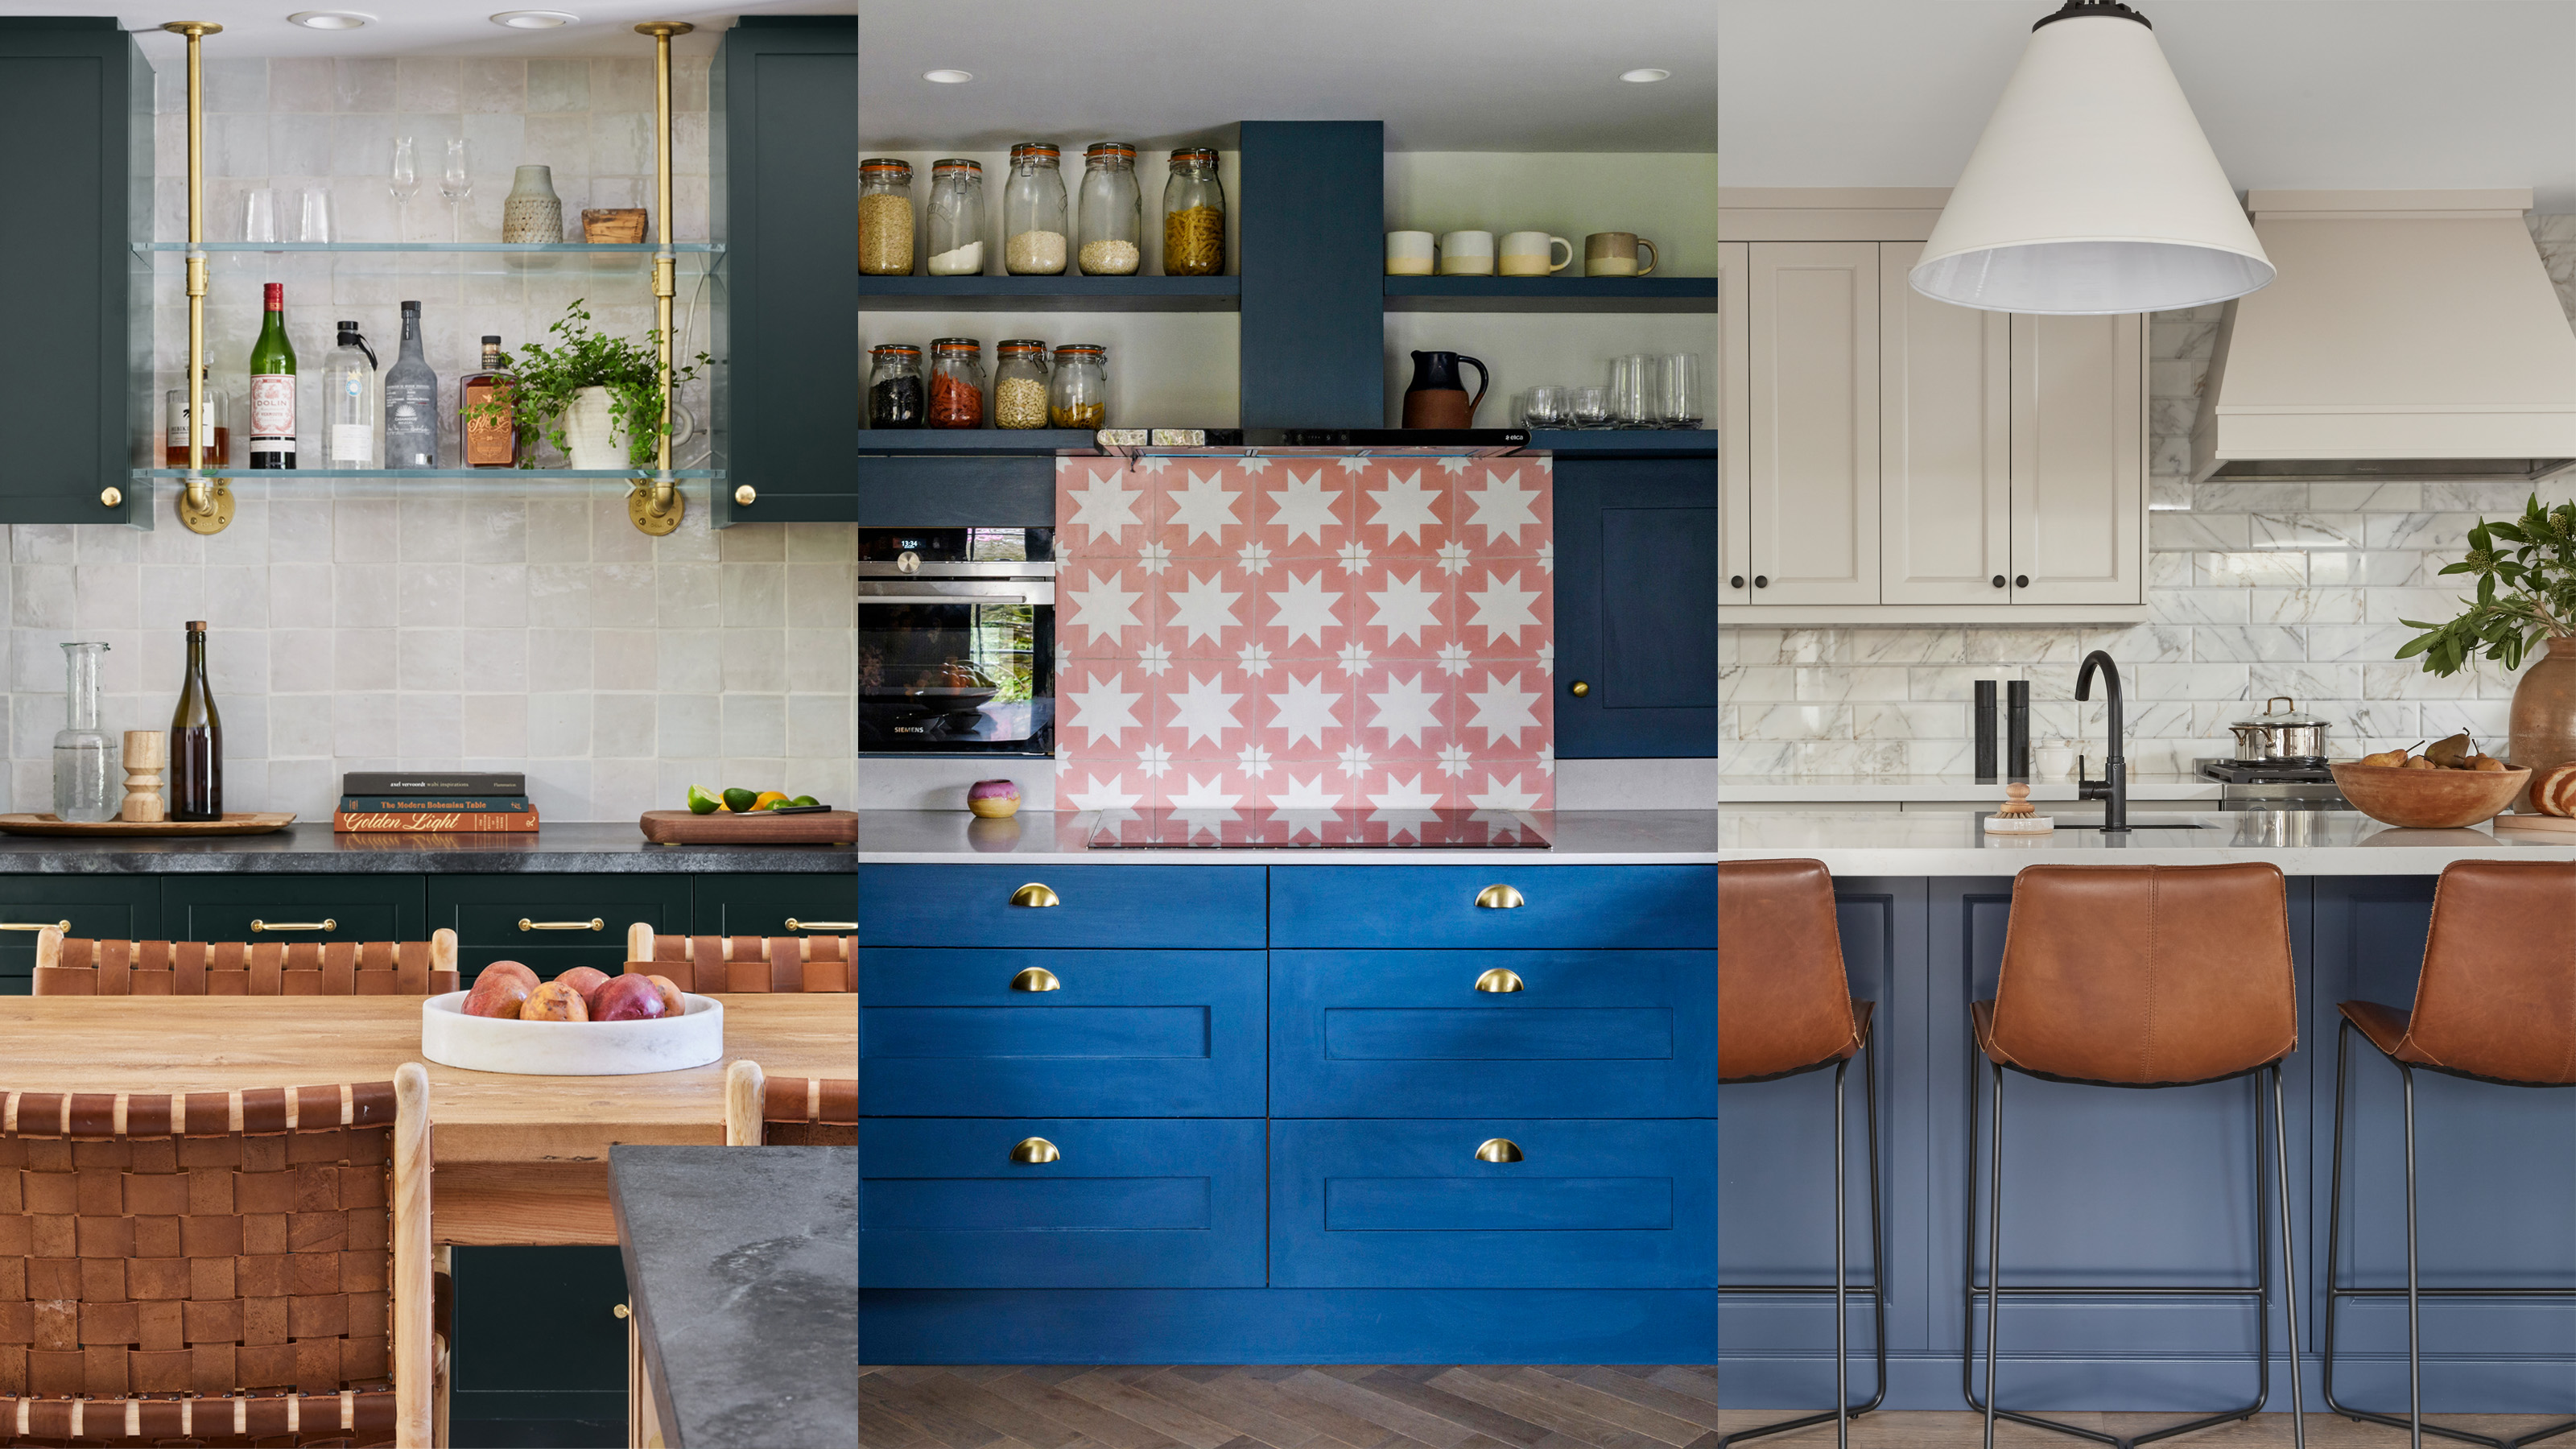 Backsplash ideas for kitchens 20 tips for all design styles ...